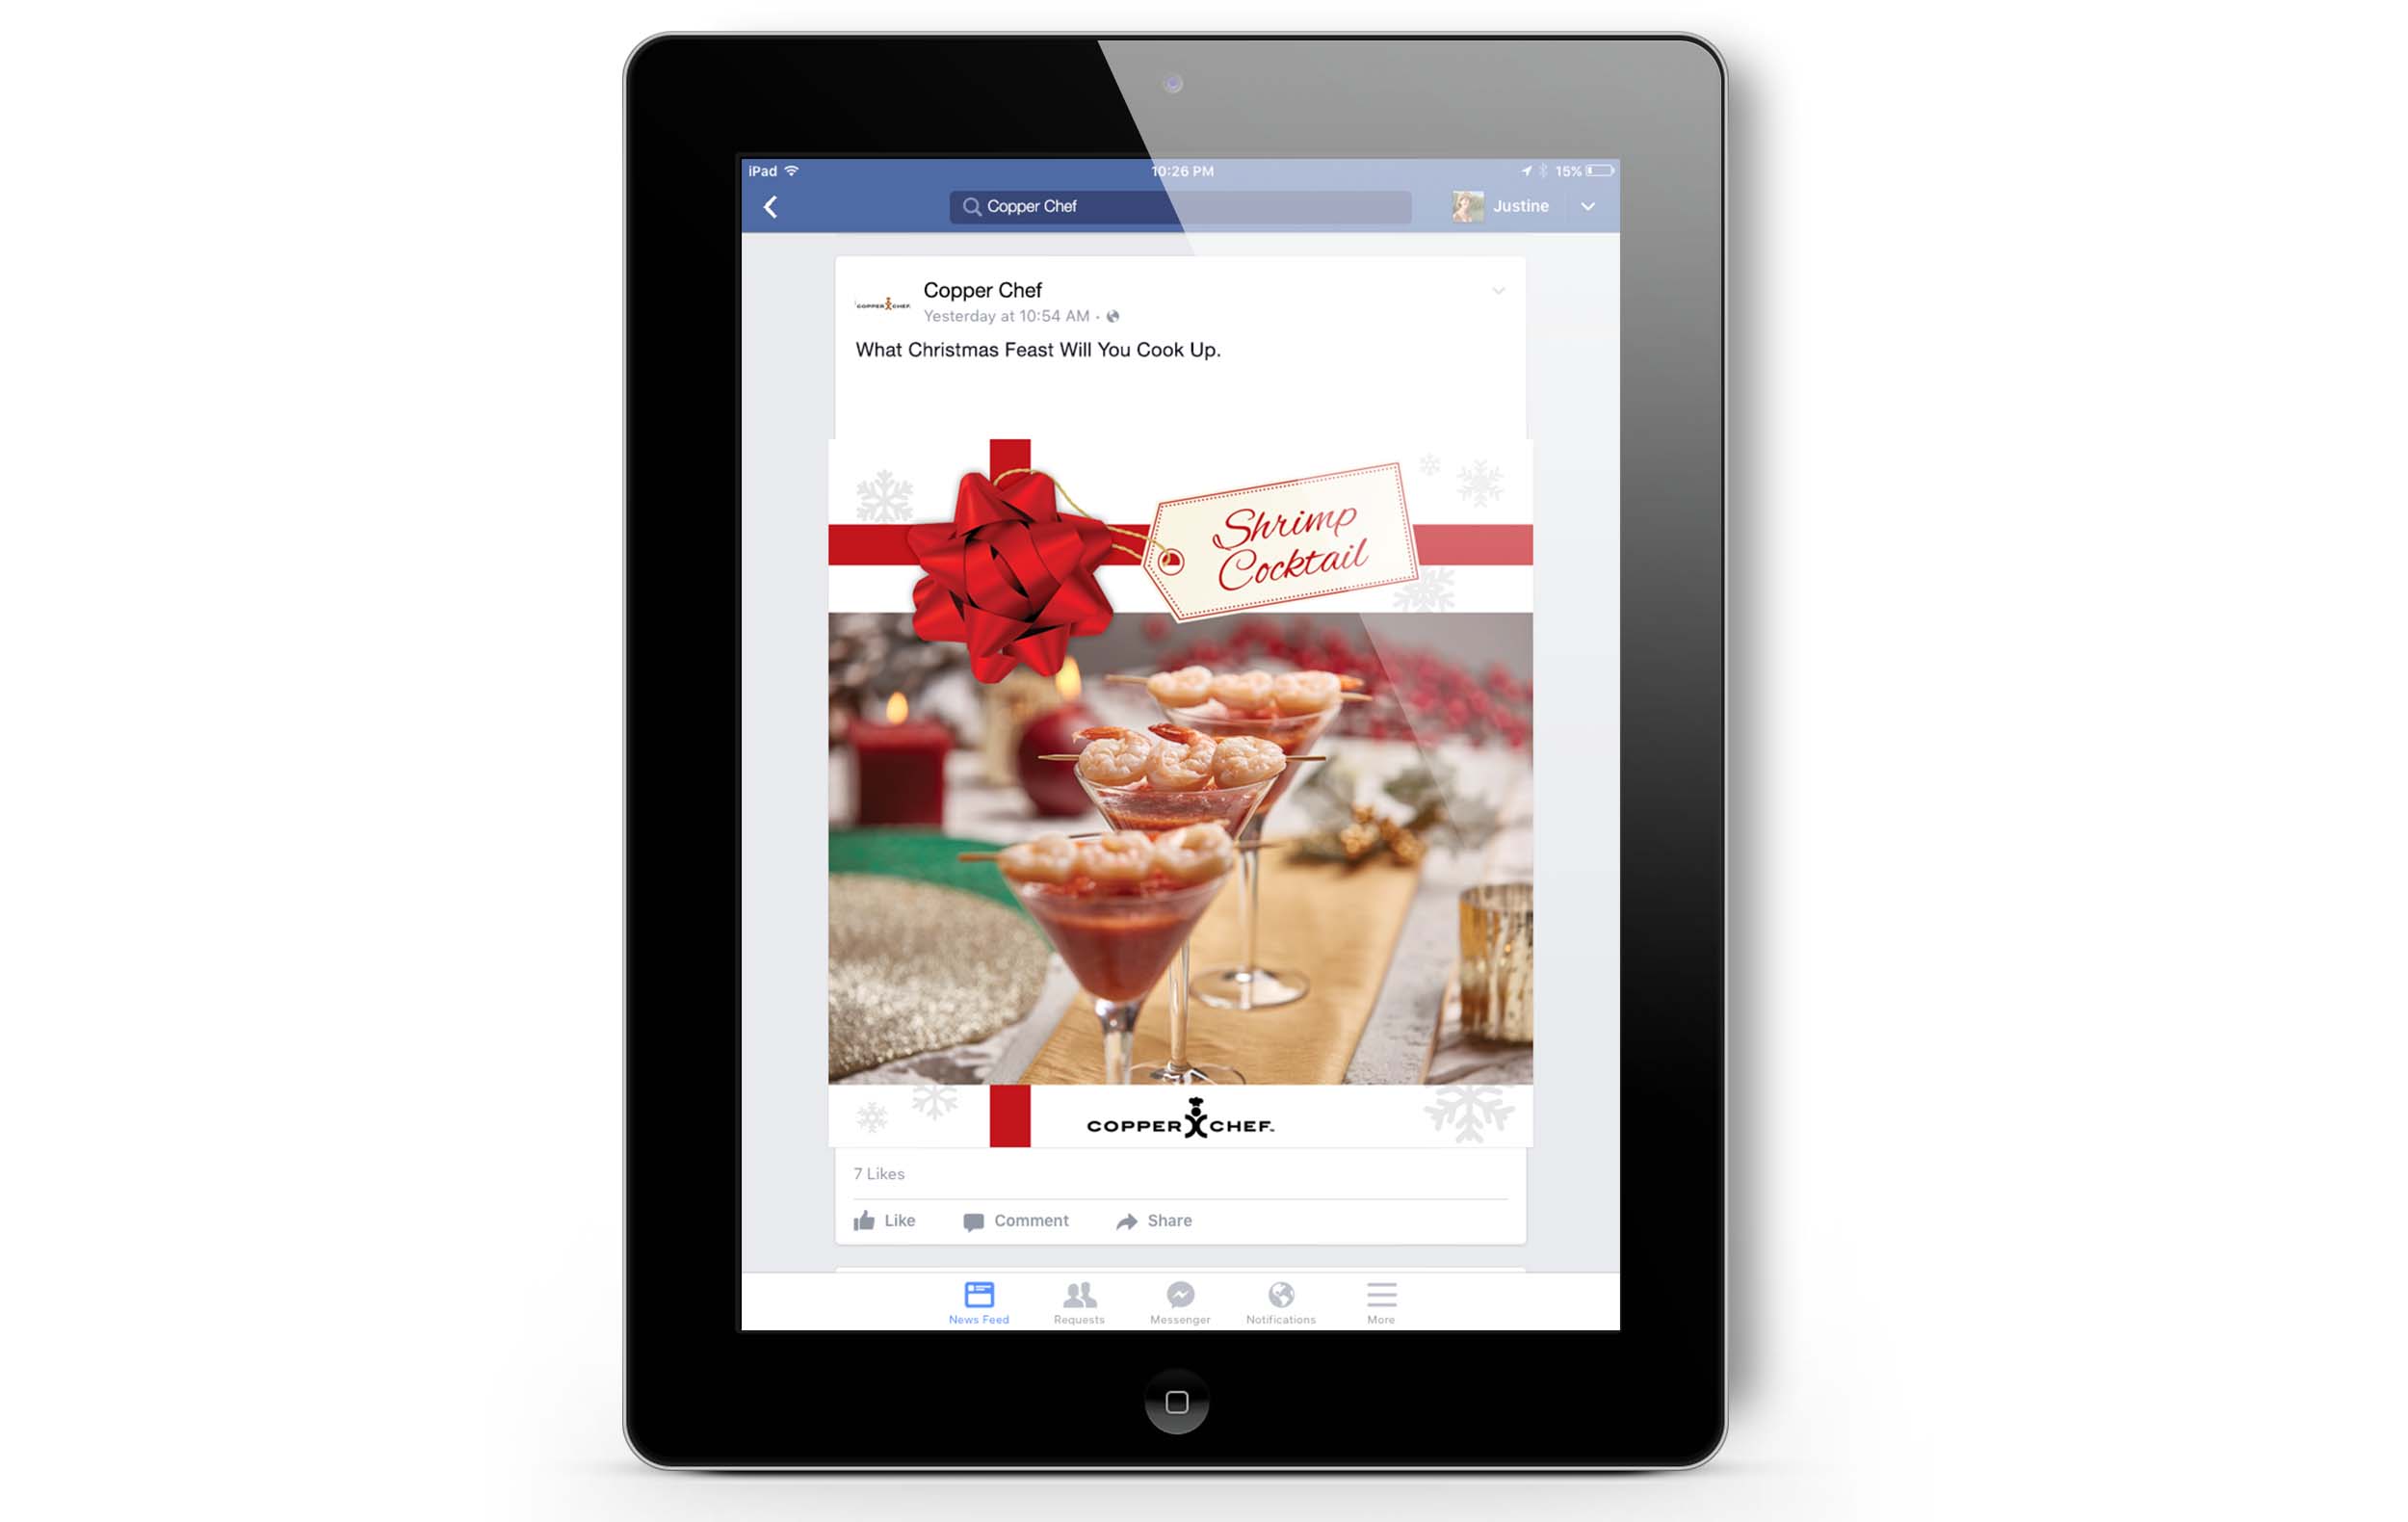 Tristar_Copper Chef_Christmas_Facebook_Mock Up_5.jpg